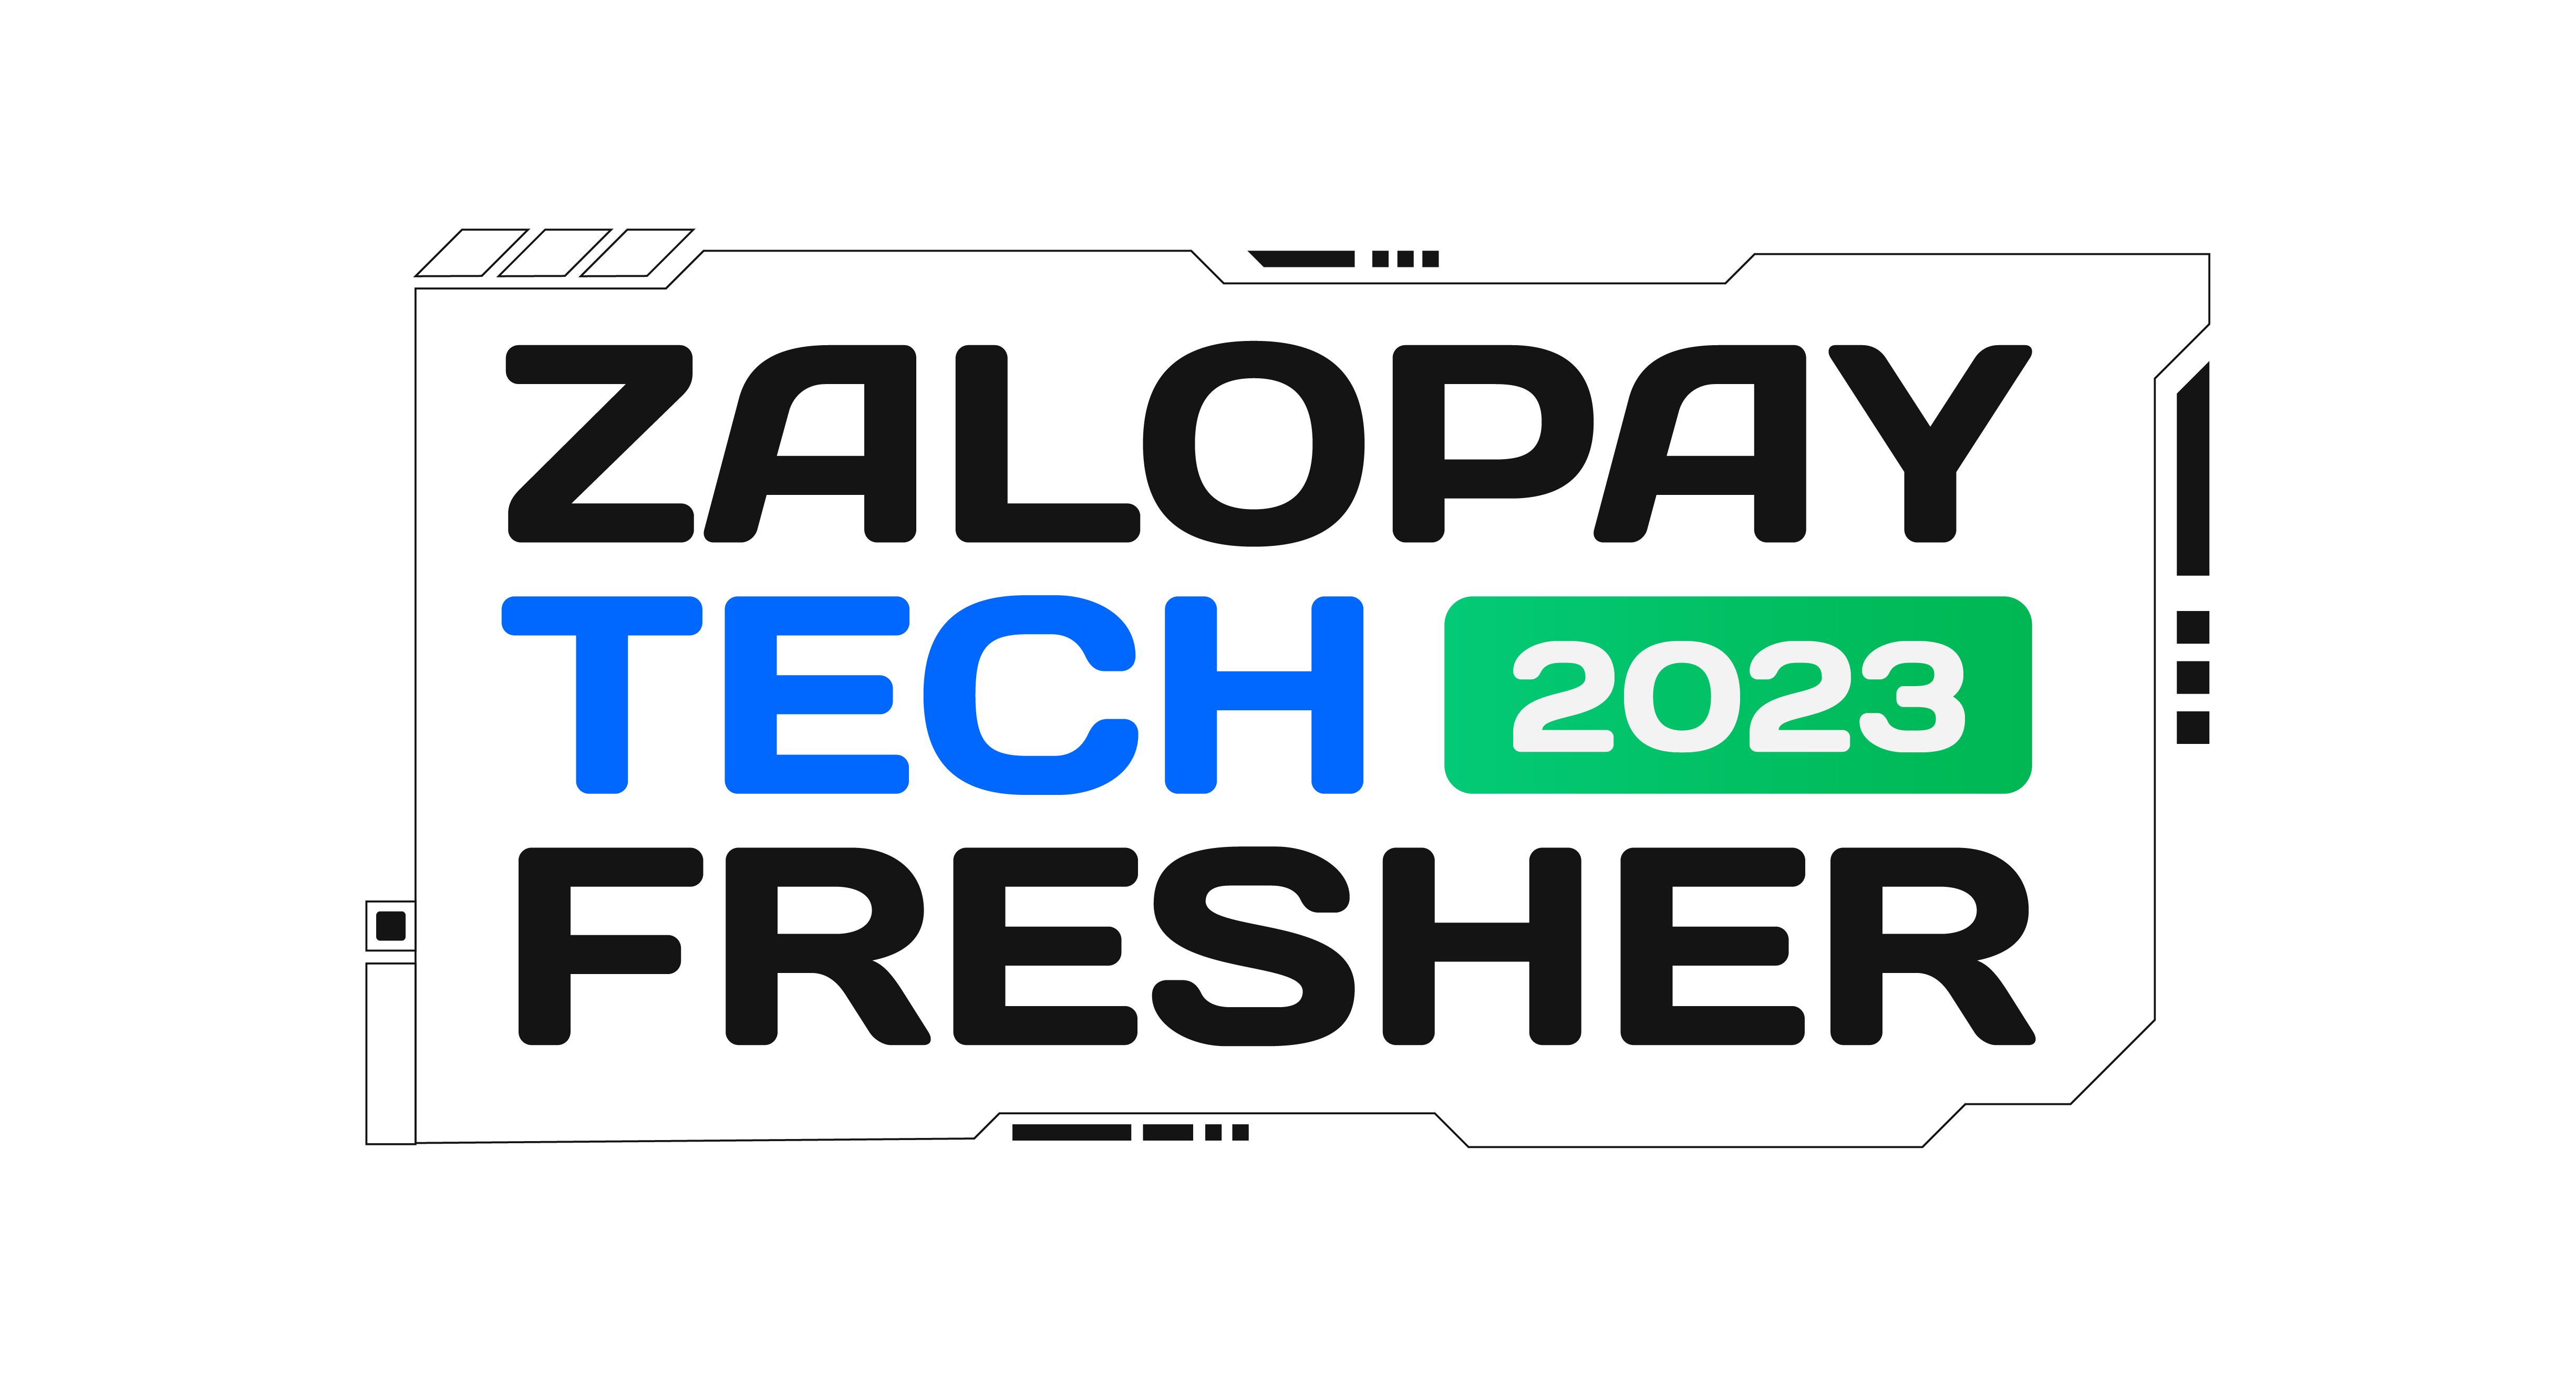 ZaloPay Tech Fresher 2023